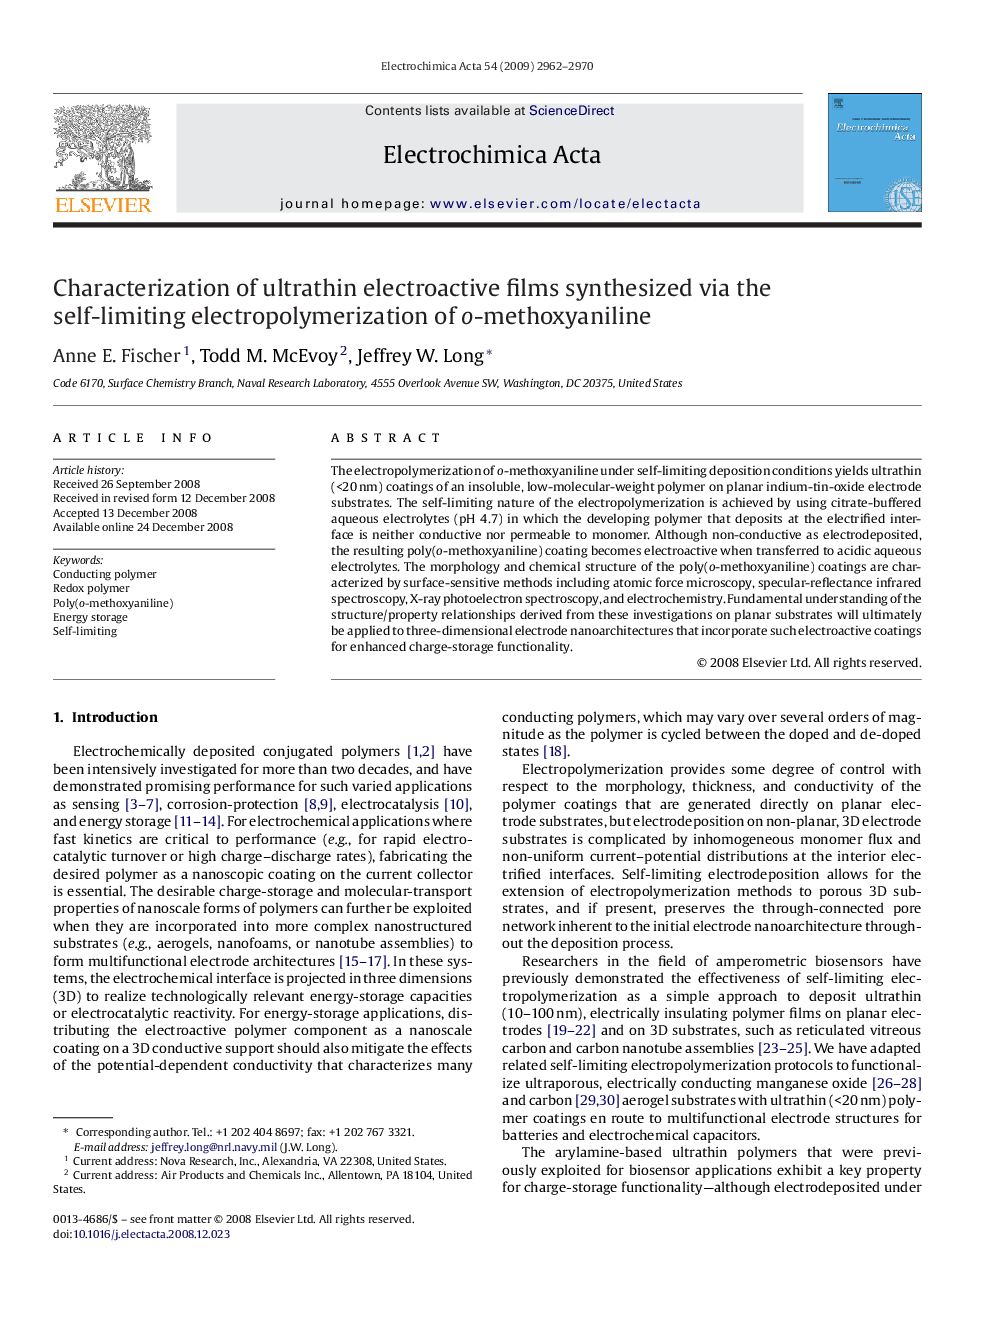 Characterization of ultrathin electroactive films synthesized via the self-limiting electropolymerization of o-methoxyaniline